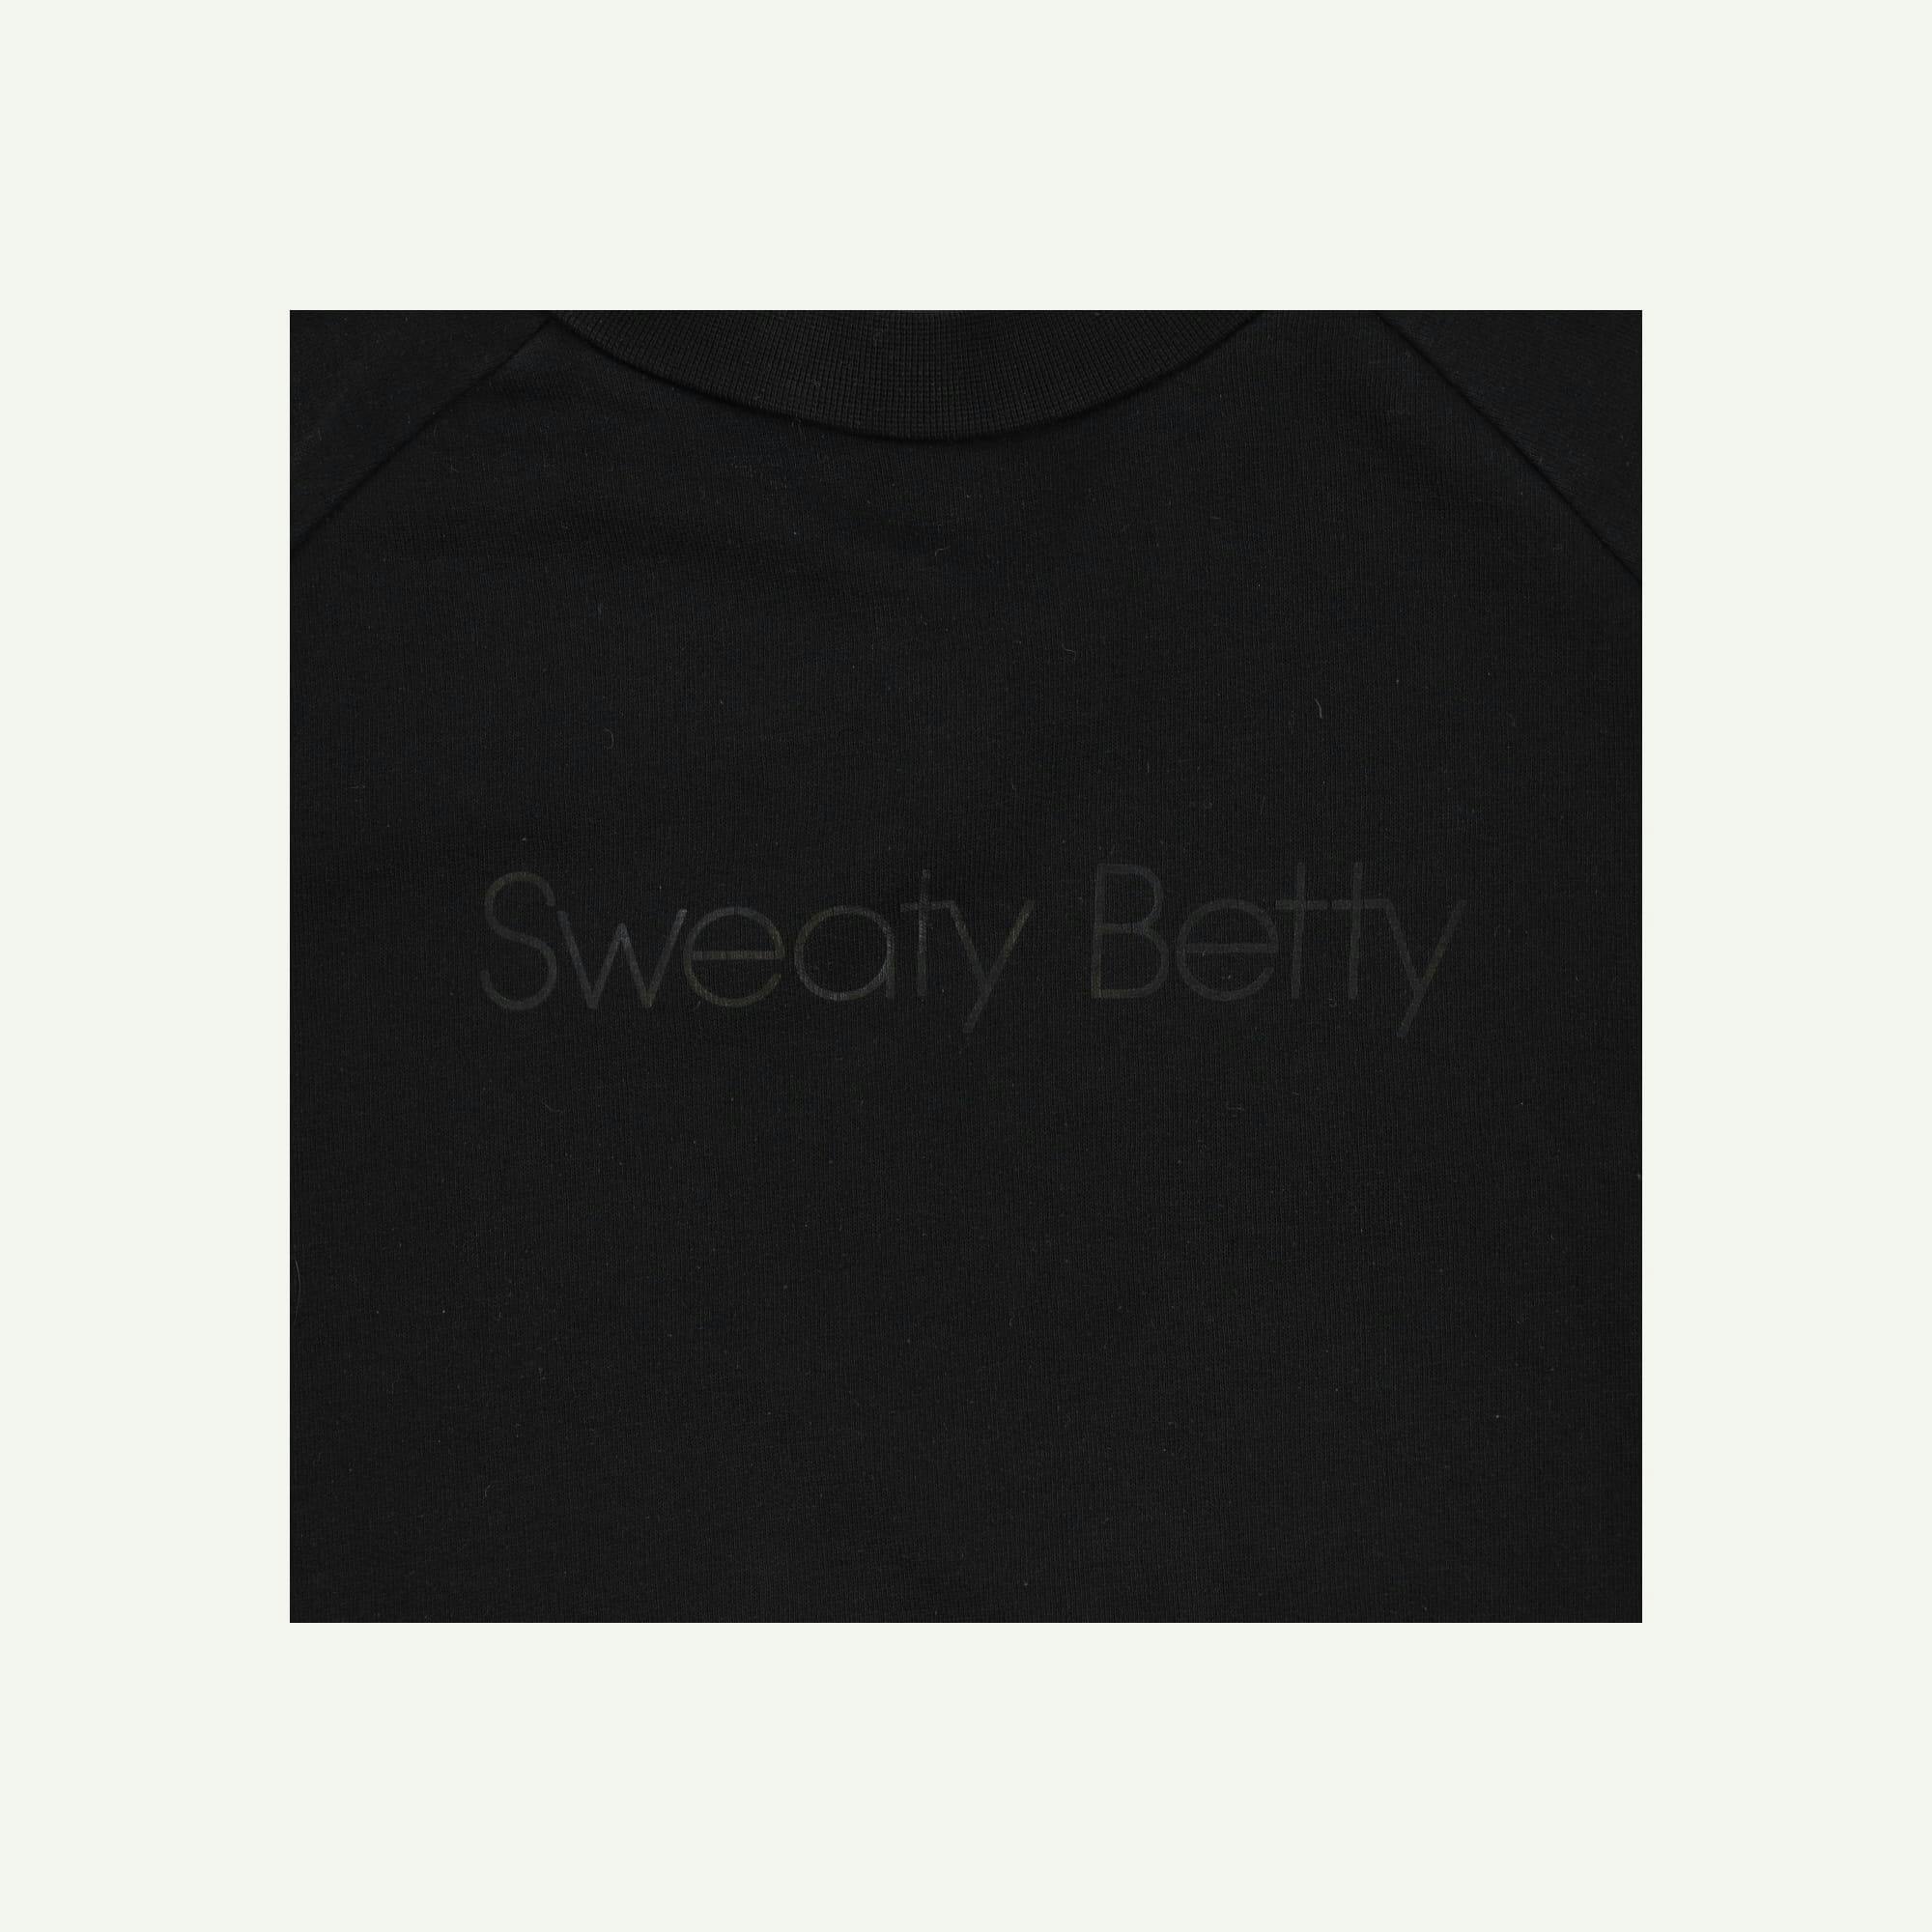 Sweaty Betty As new Black Sweatshirt